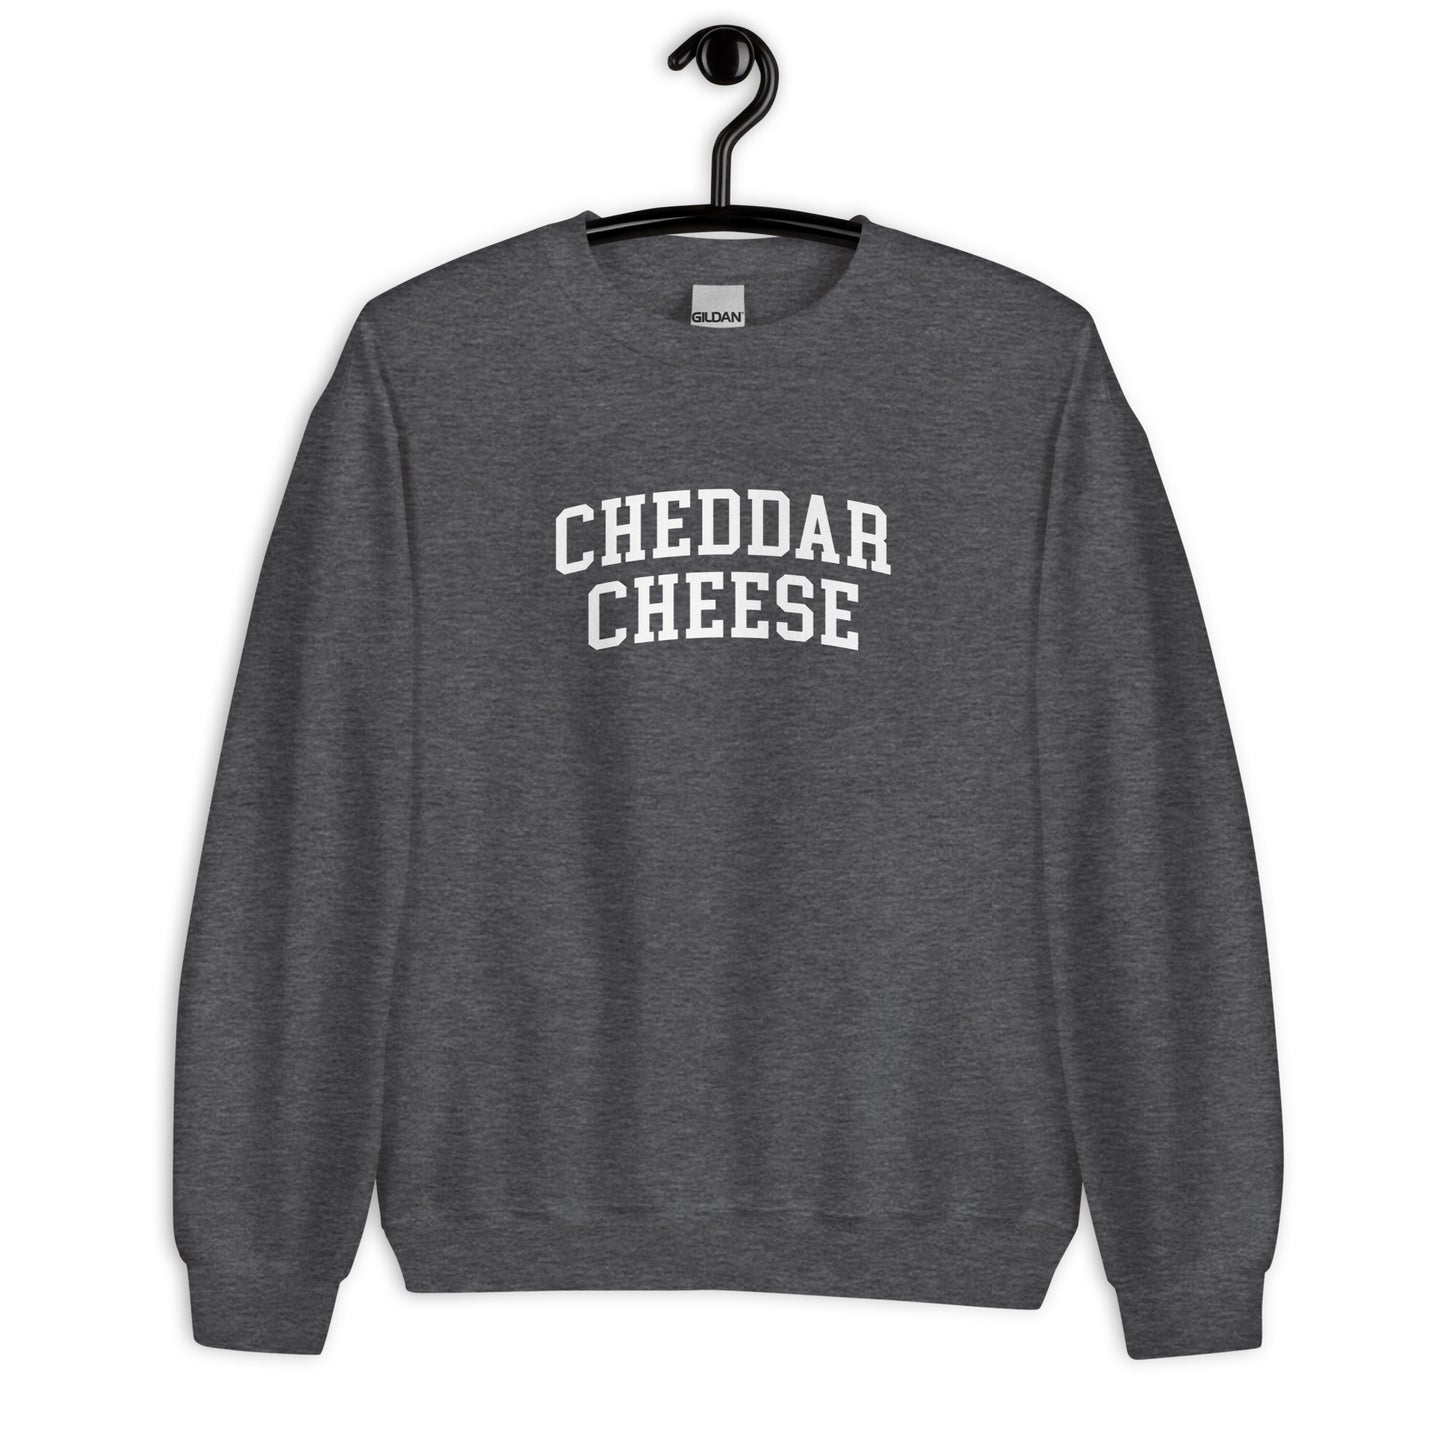 Cheddar Cheese Sweatshirt - Arched Font